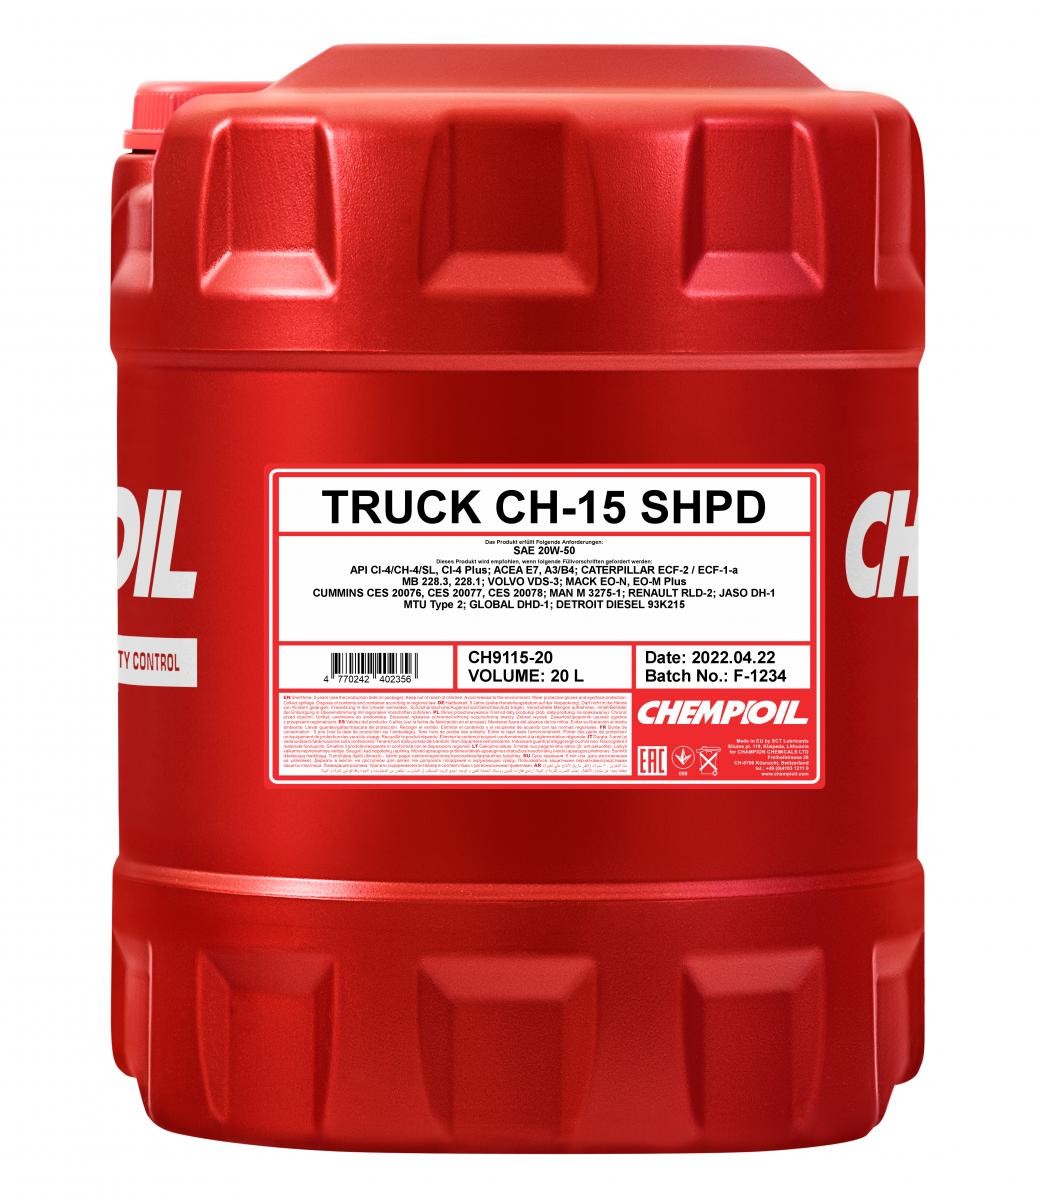 Kaufen Auto Motoröl CHEMPIOIL CH9115-20 Truck, SHPD CH-15 20W-50, 20l